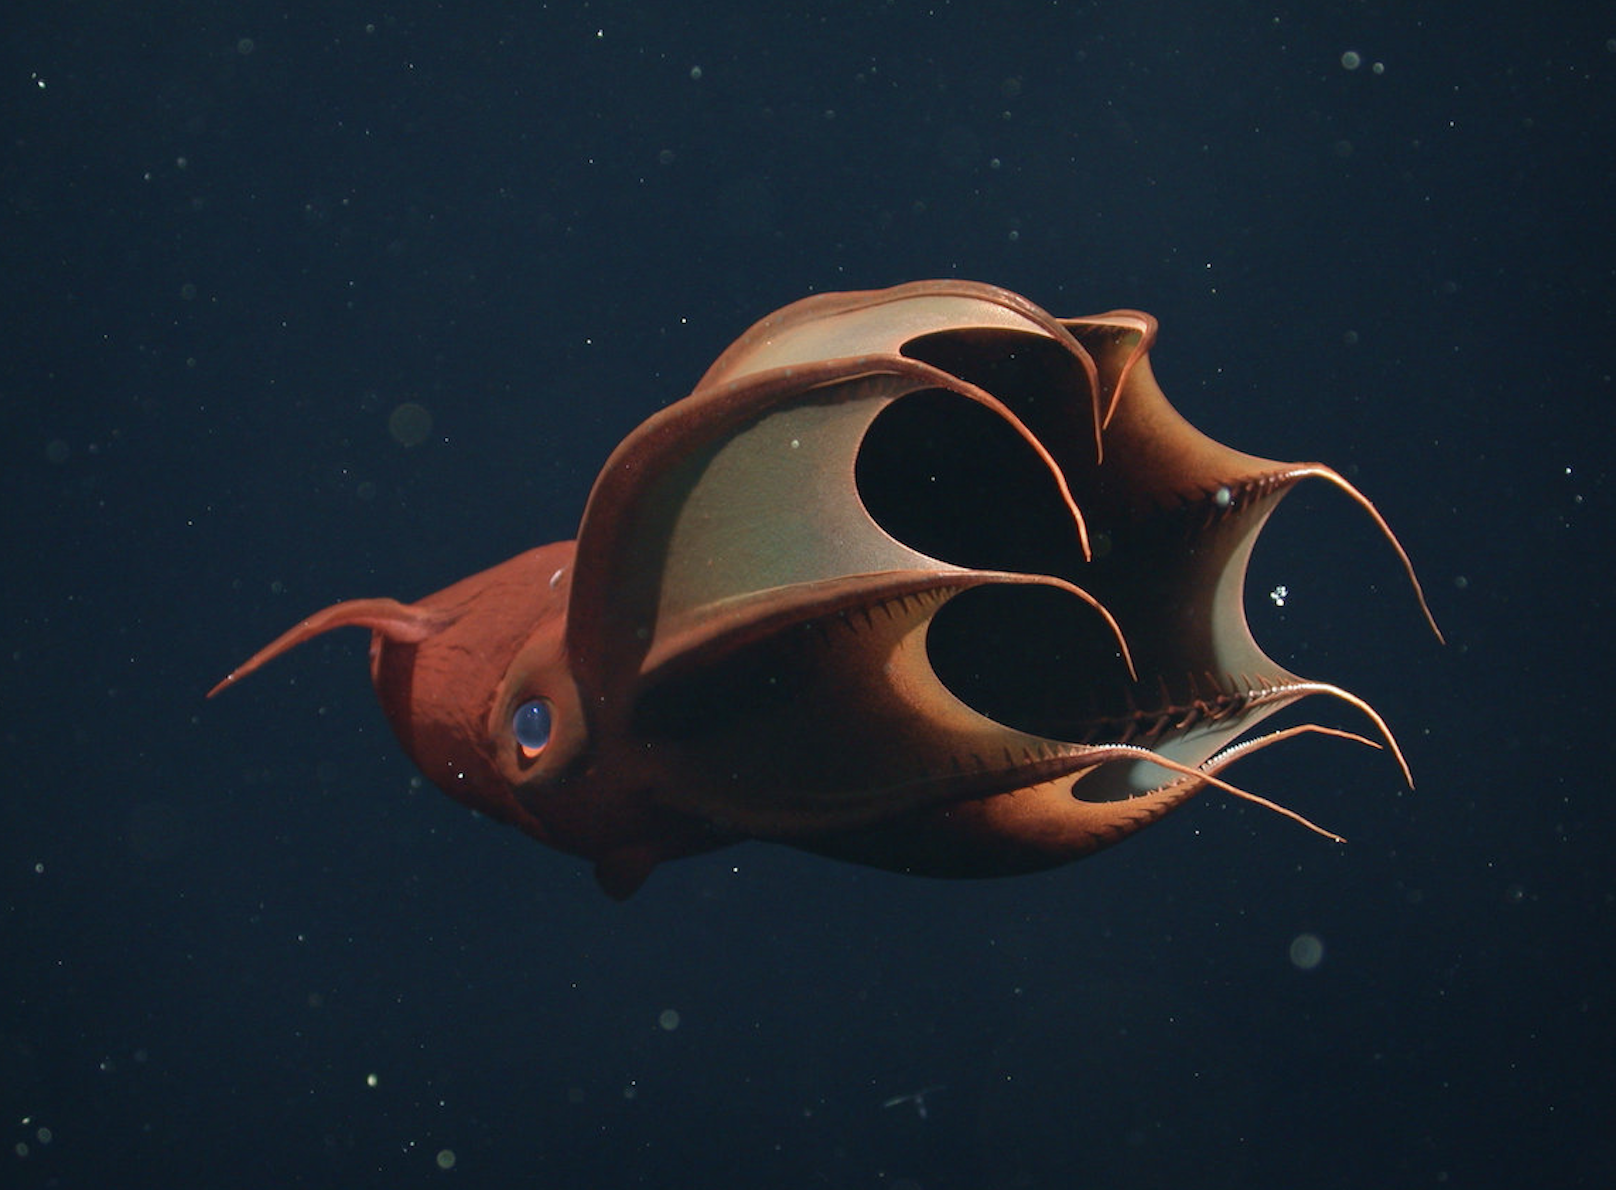 Vampyroteuthis infernalis vit dans les profondeurs de l'océan. © MBARI